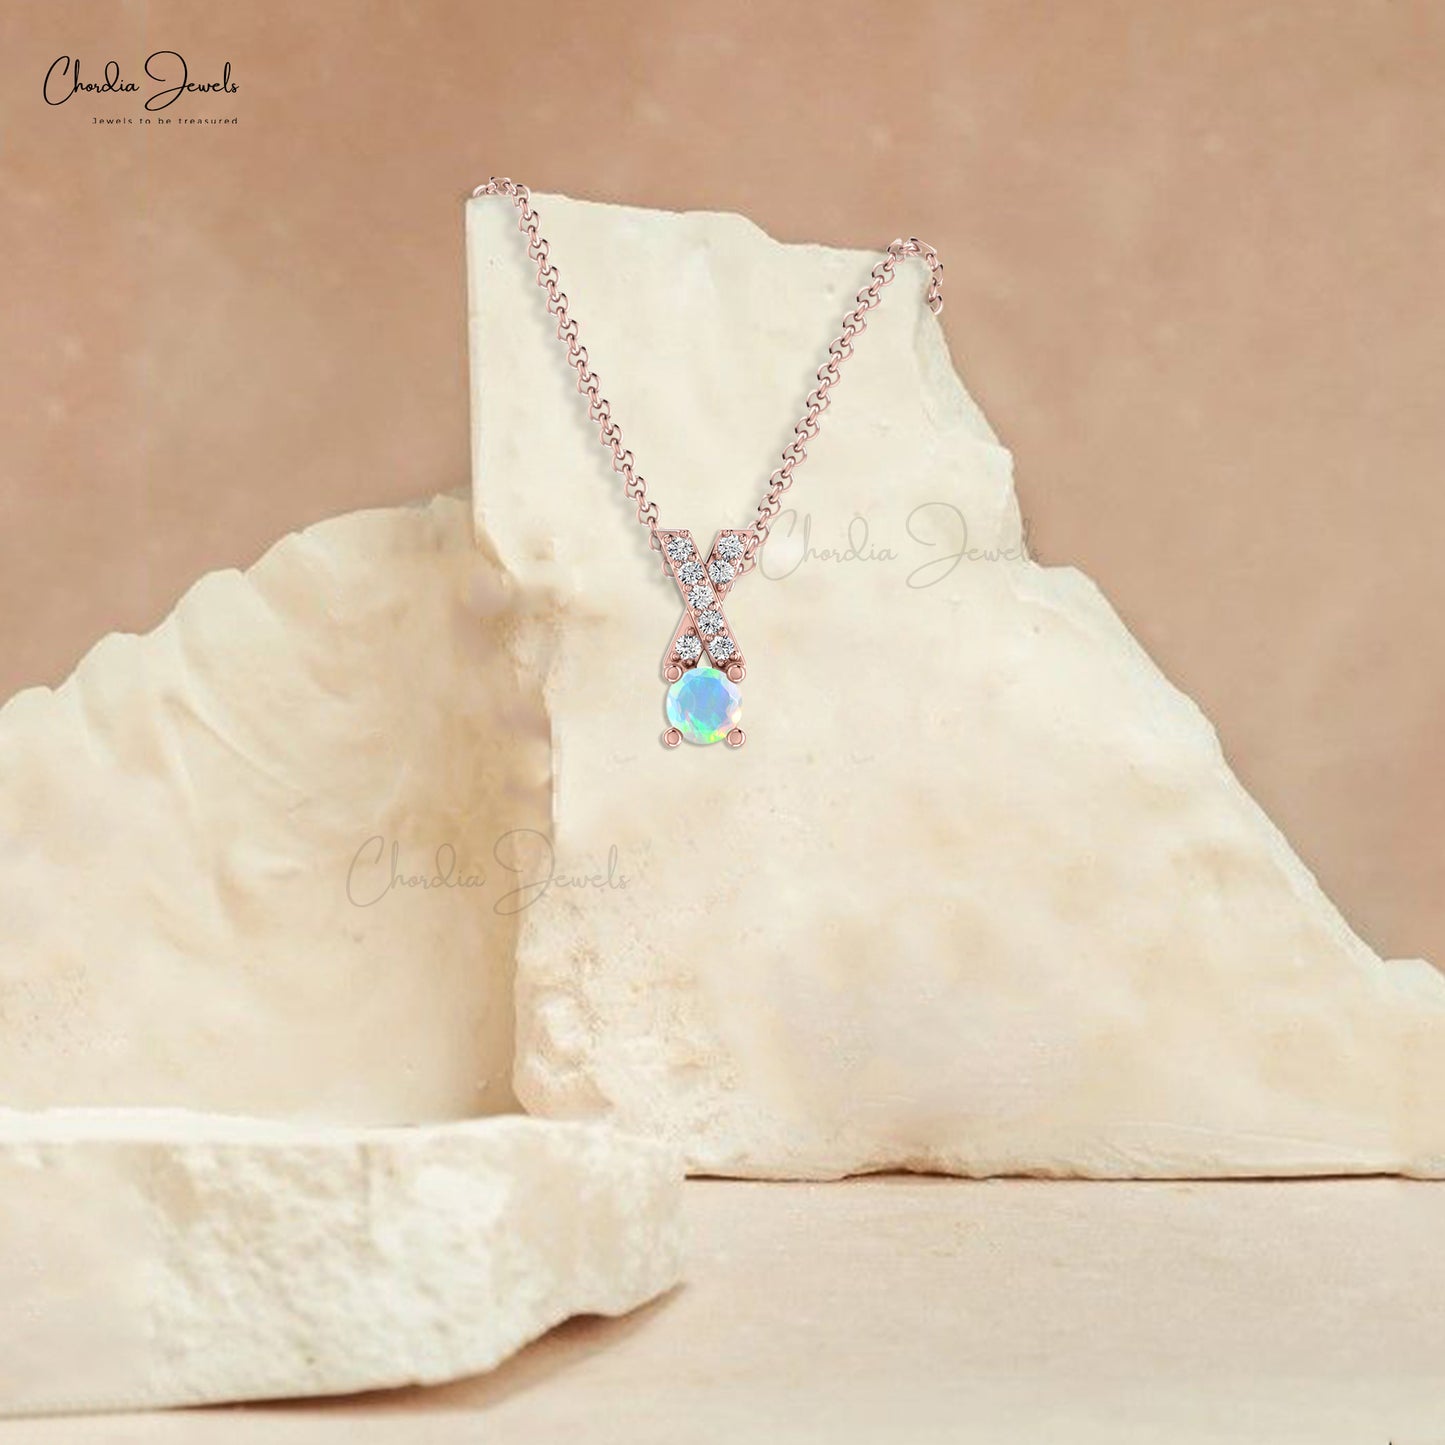 Natural Ethiopian Opal Criss Cross Pendant 14k Solid Gold Diamond Pendant 0.37 Carat Round Cut Handmade Gemstone Pendant For Birthday Gift